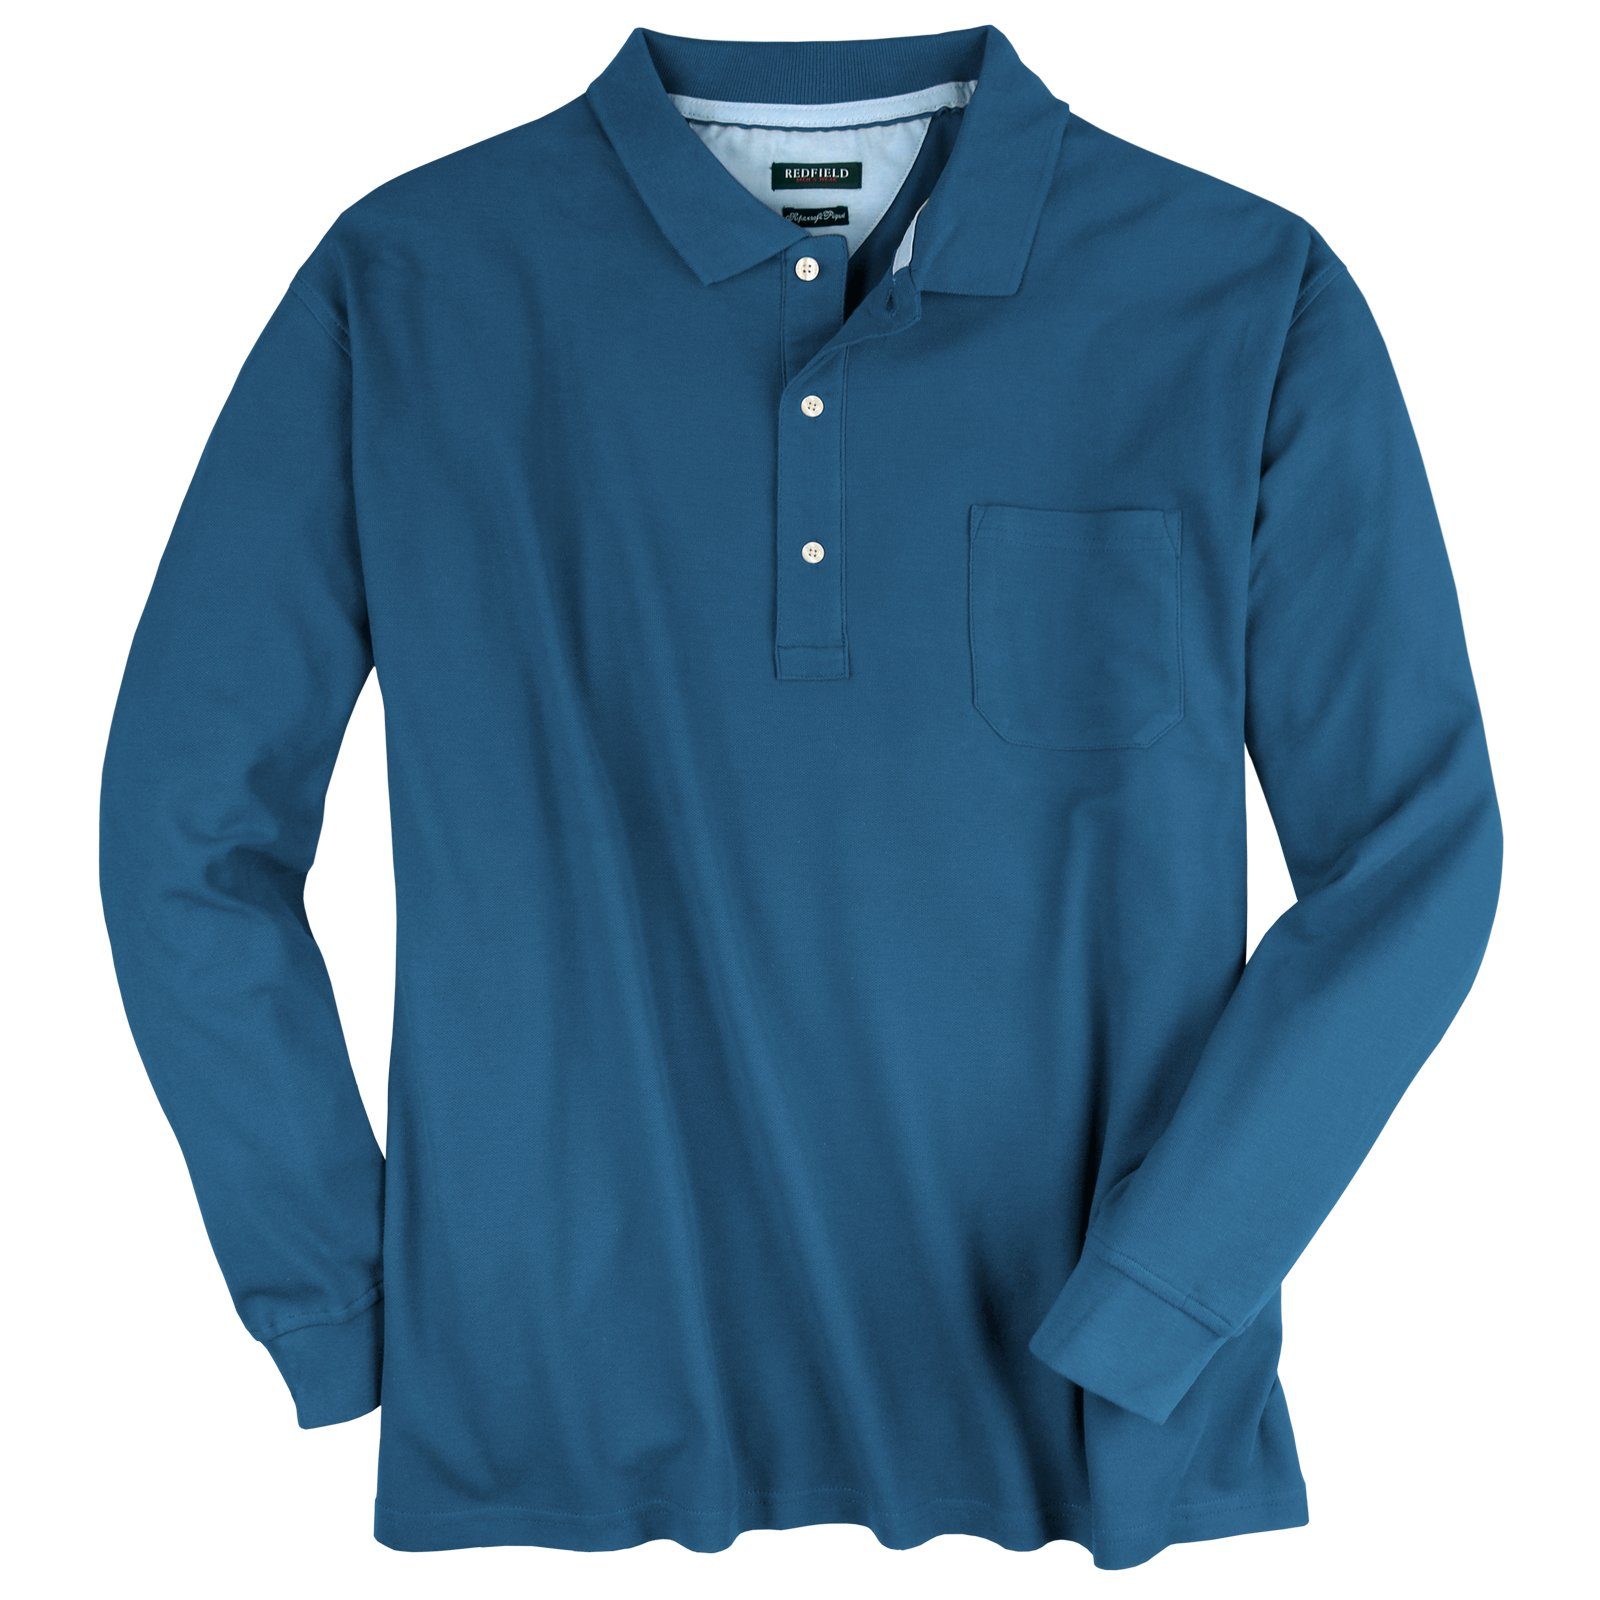 indigoblau Herren Langarm-Poloshirt Übergrößen redfield Harry Redfield Langarm-Poloshirt